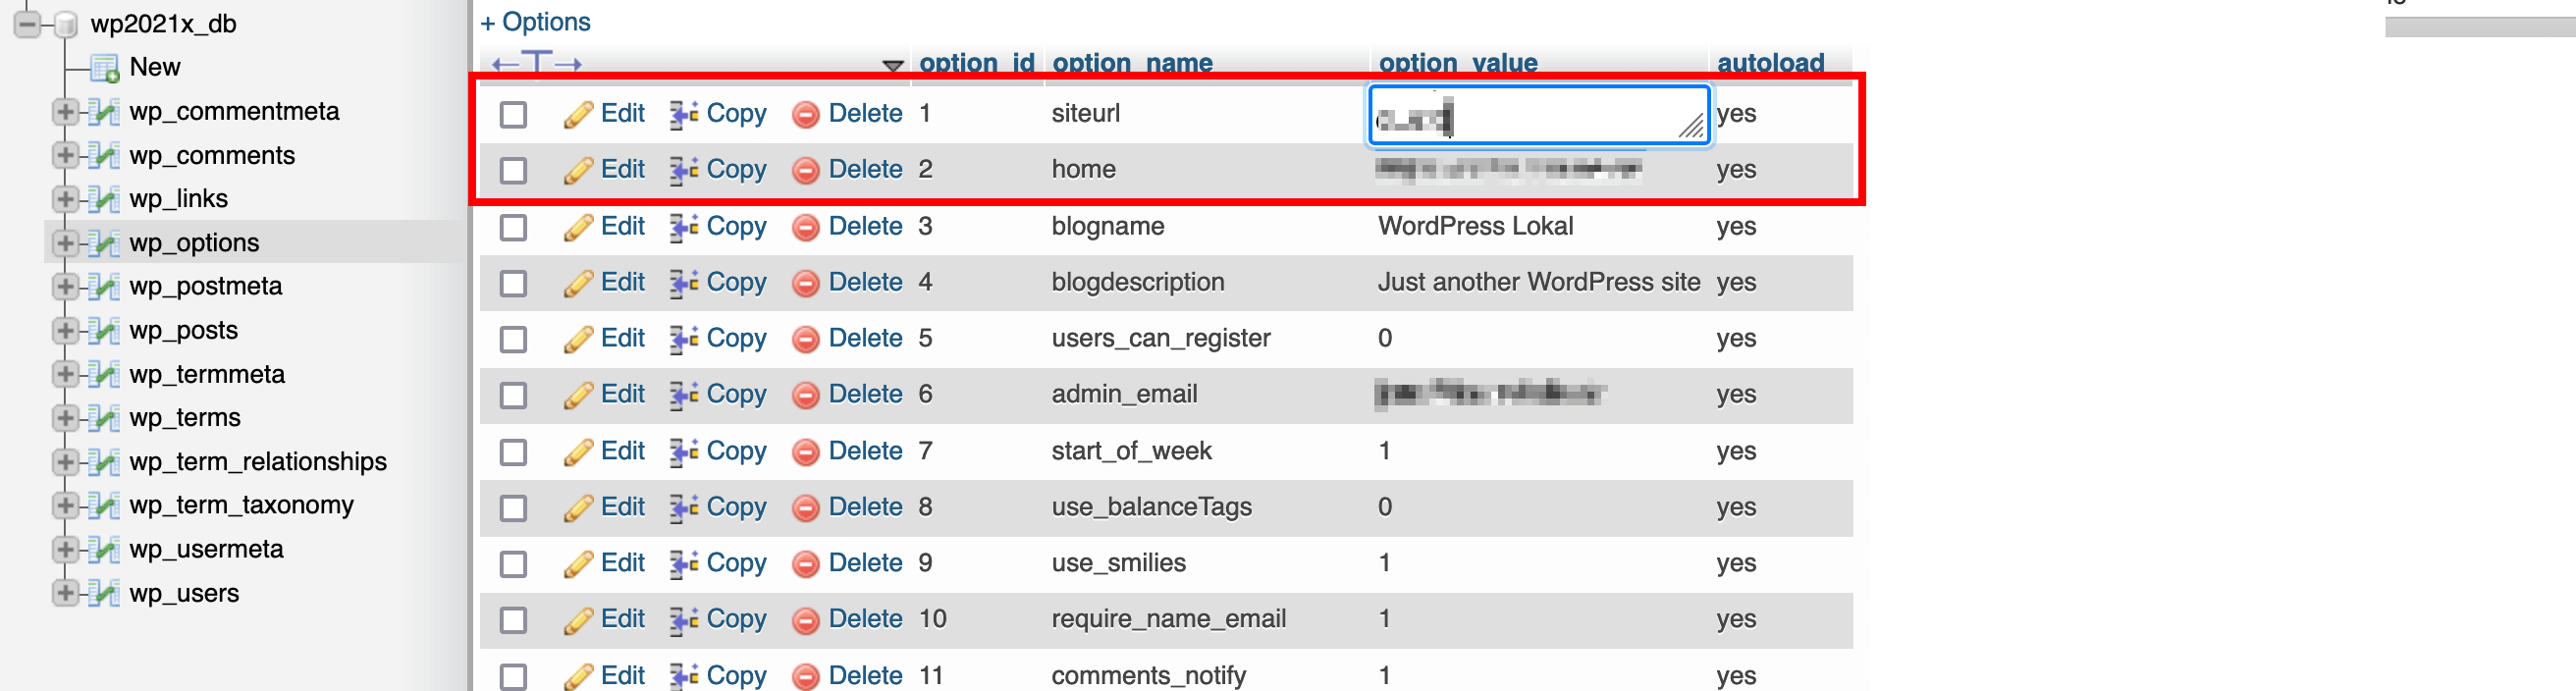 wp_options en la base de datos de WordPress